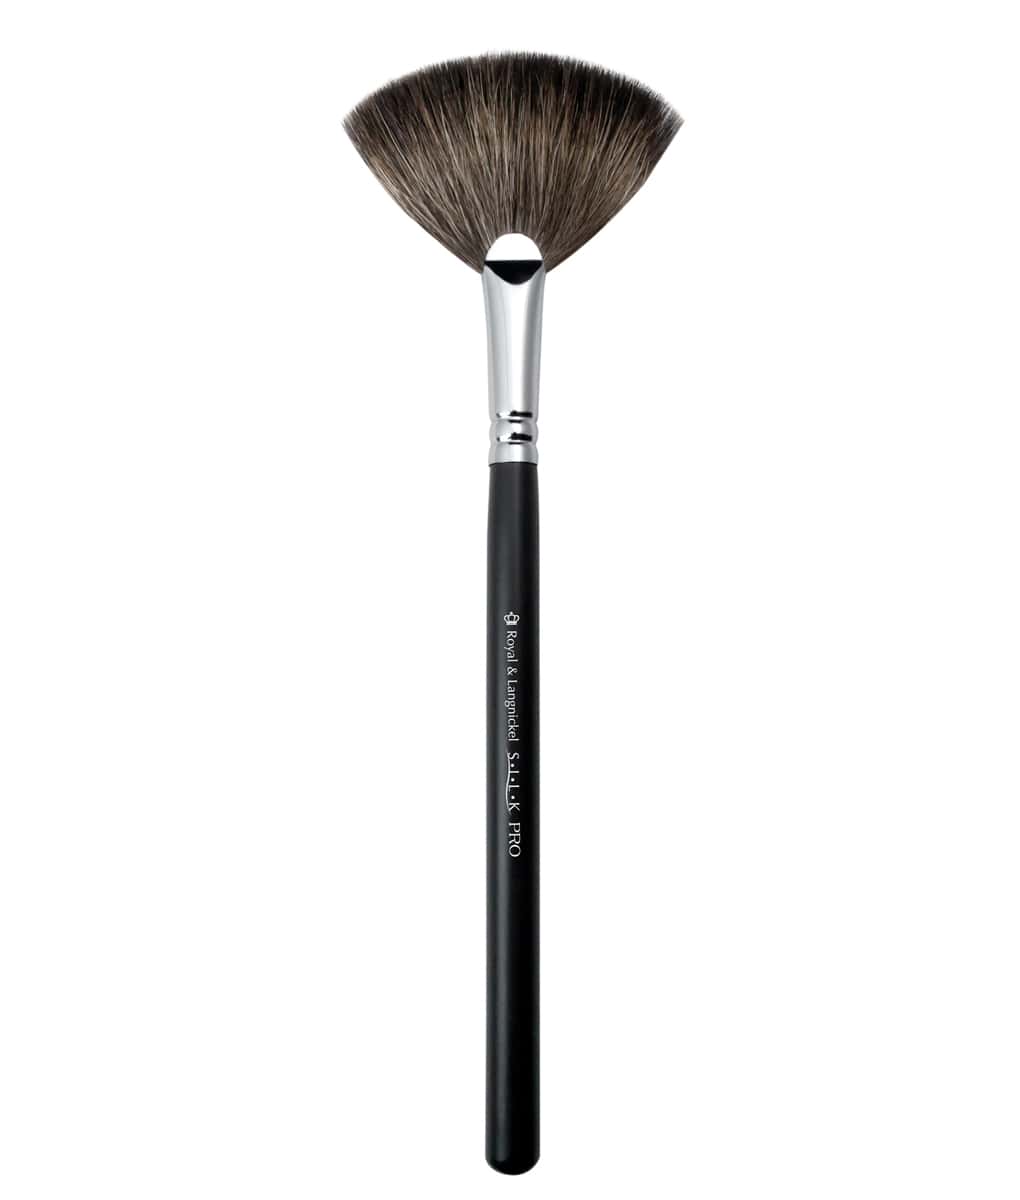 Fan Brush Makeup  Graftobian Professional Makeup – Graftobian